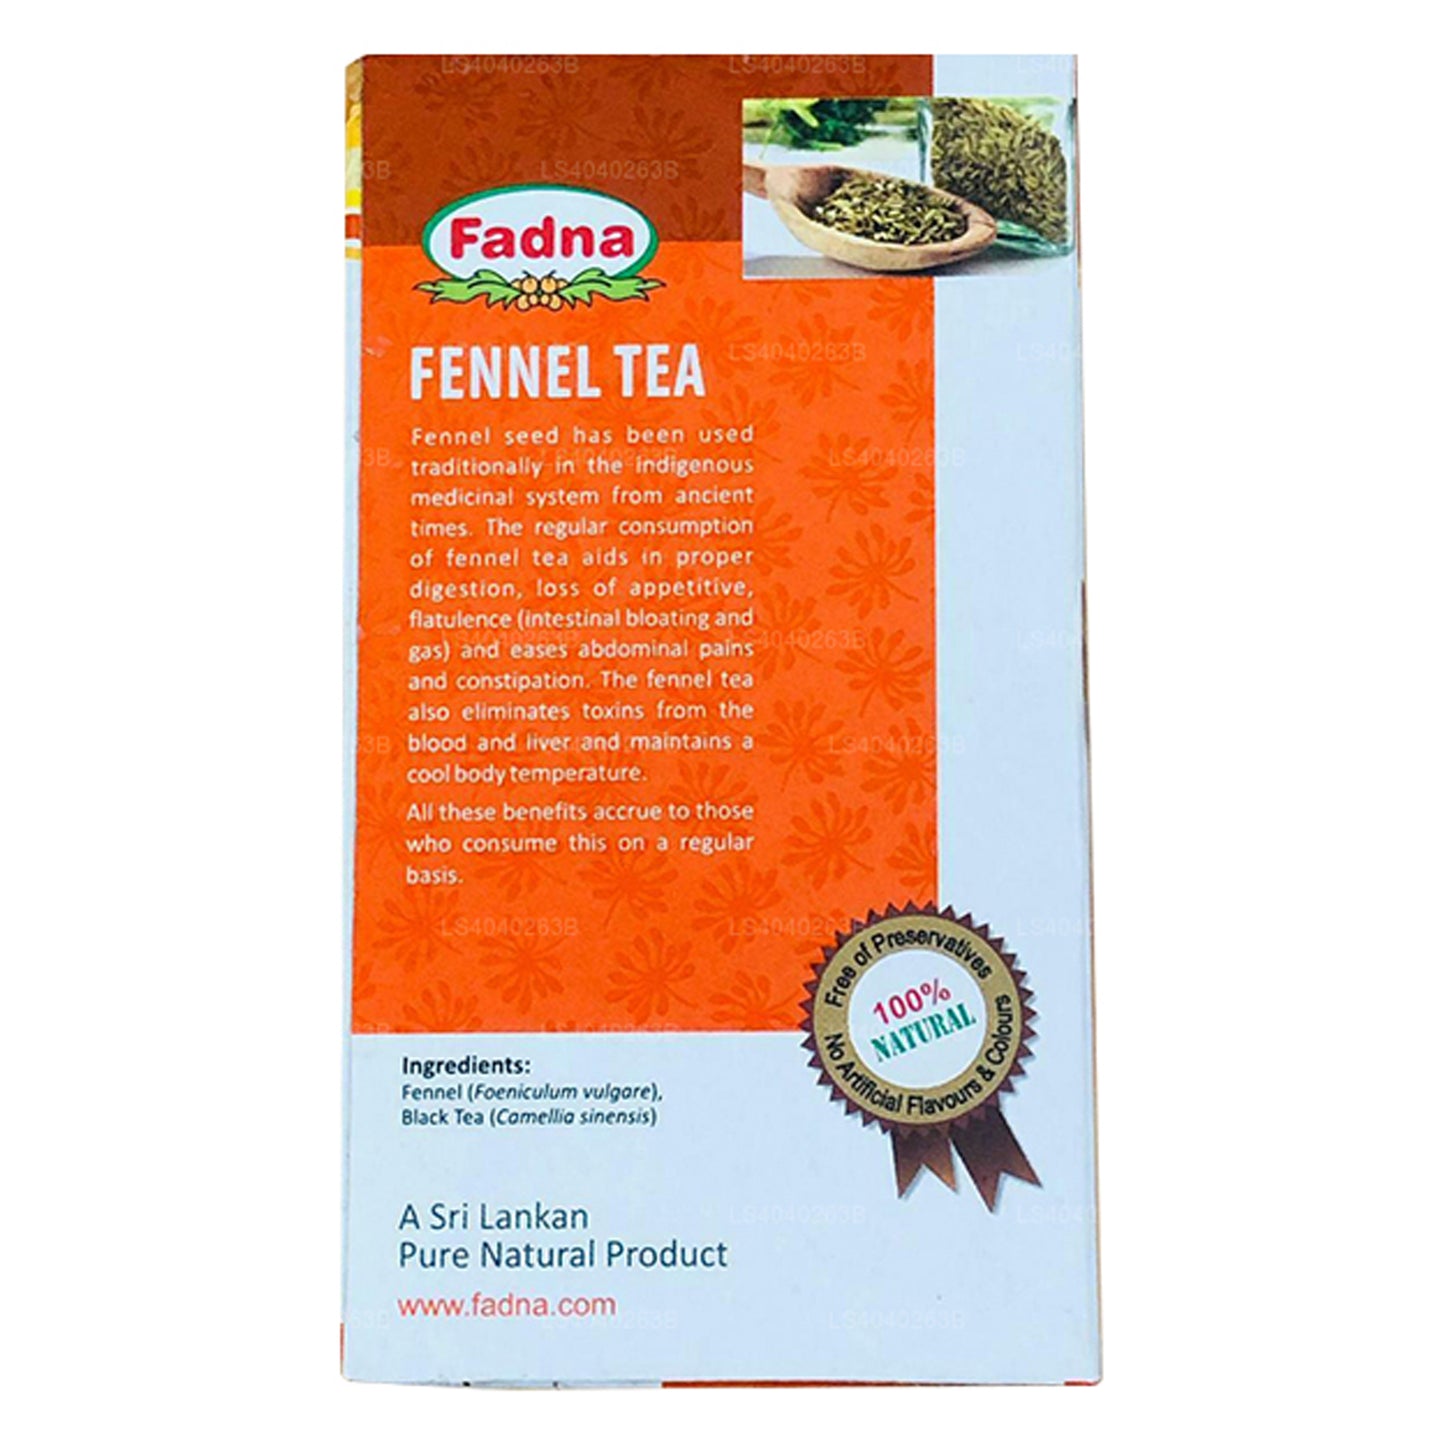 Tè al finocchio Fadna (40g) 20 bustine di tè